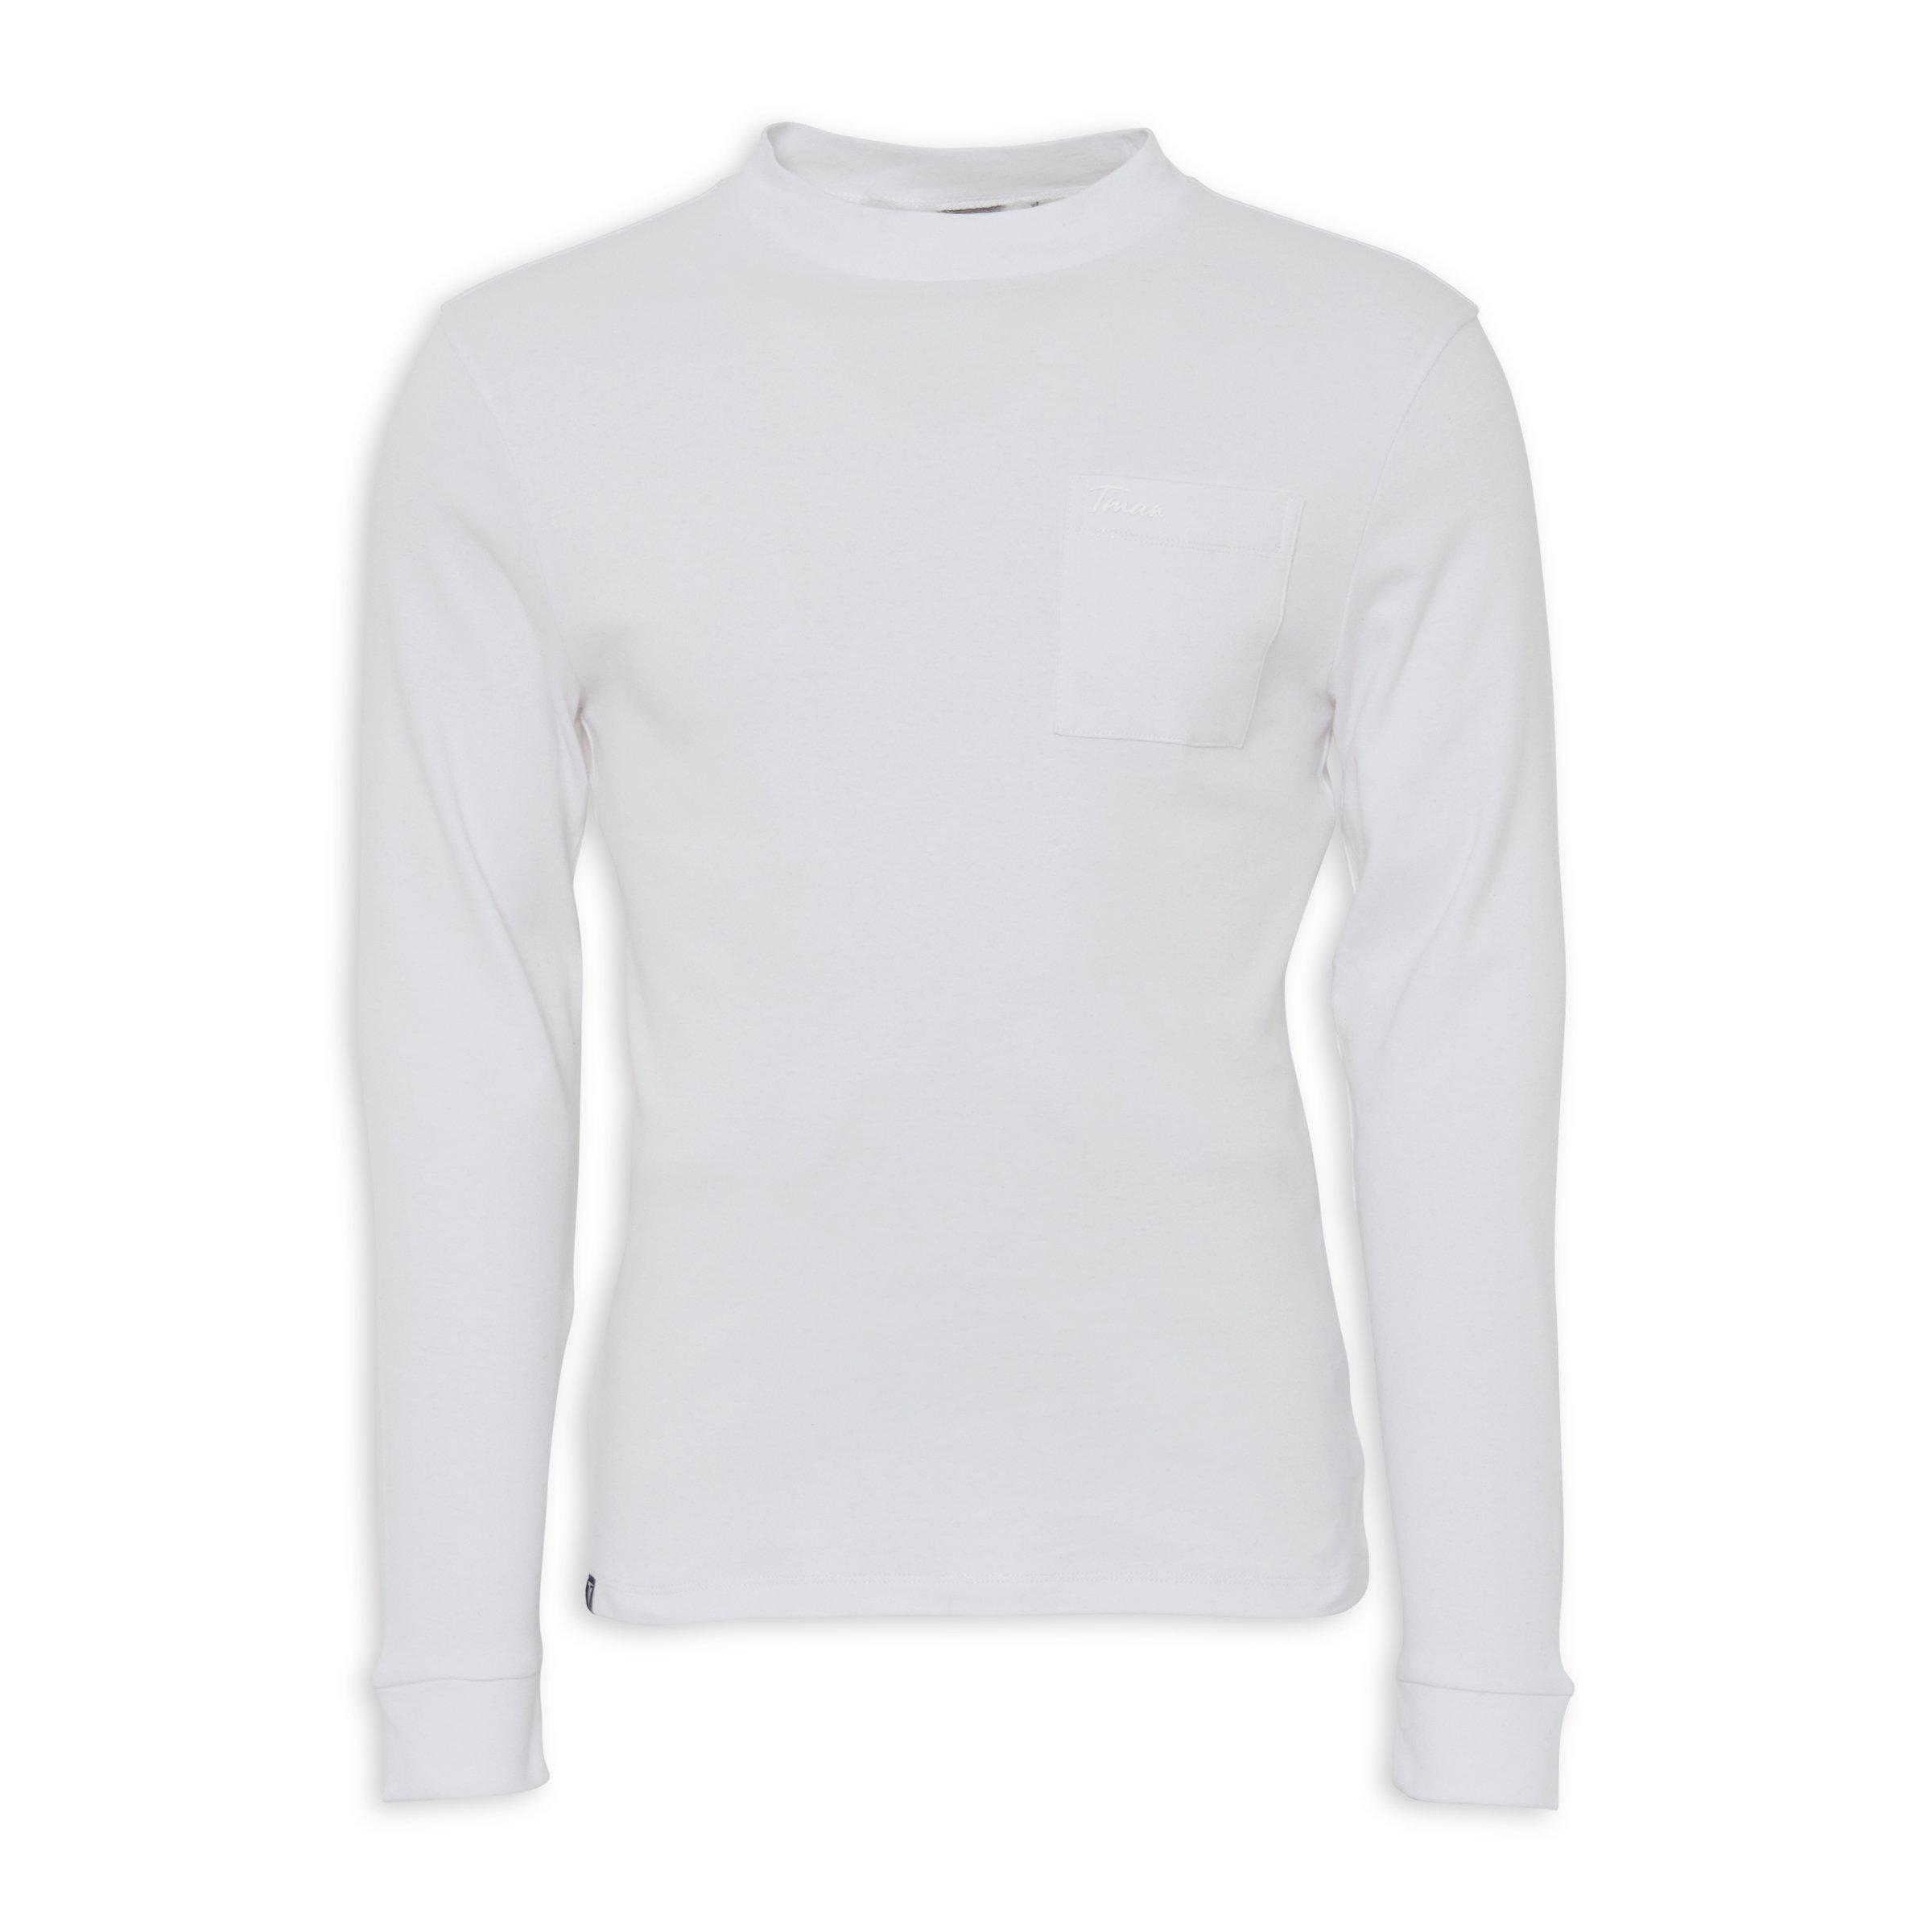 Buy Truworths Man White Long Sleeve T-Shirt Online | Truworths